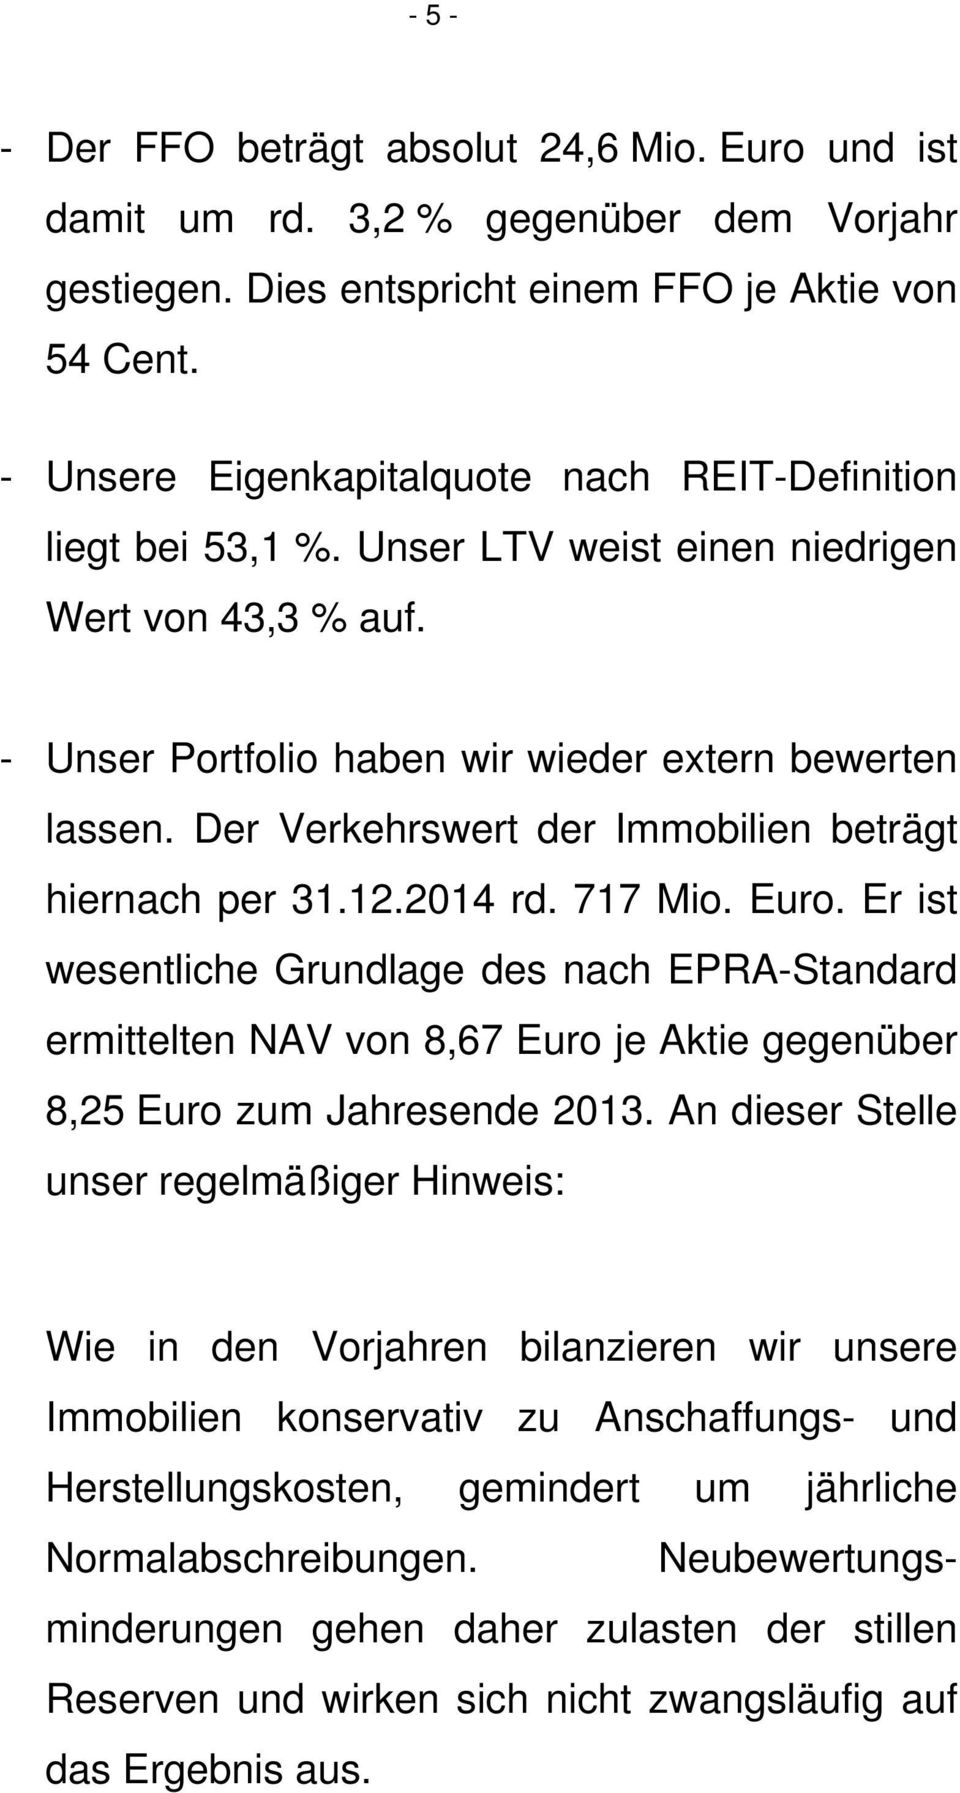 Der Verkehrswert der Immobilien beträgt hiernach per 31.12.2014 rd. 717 Mio. Euro.